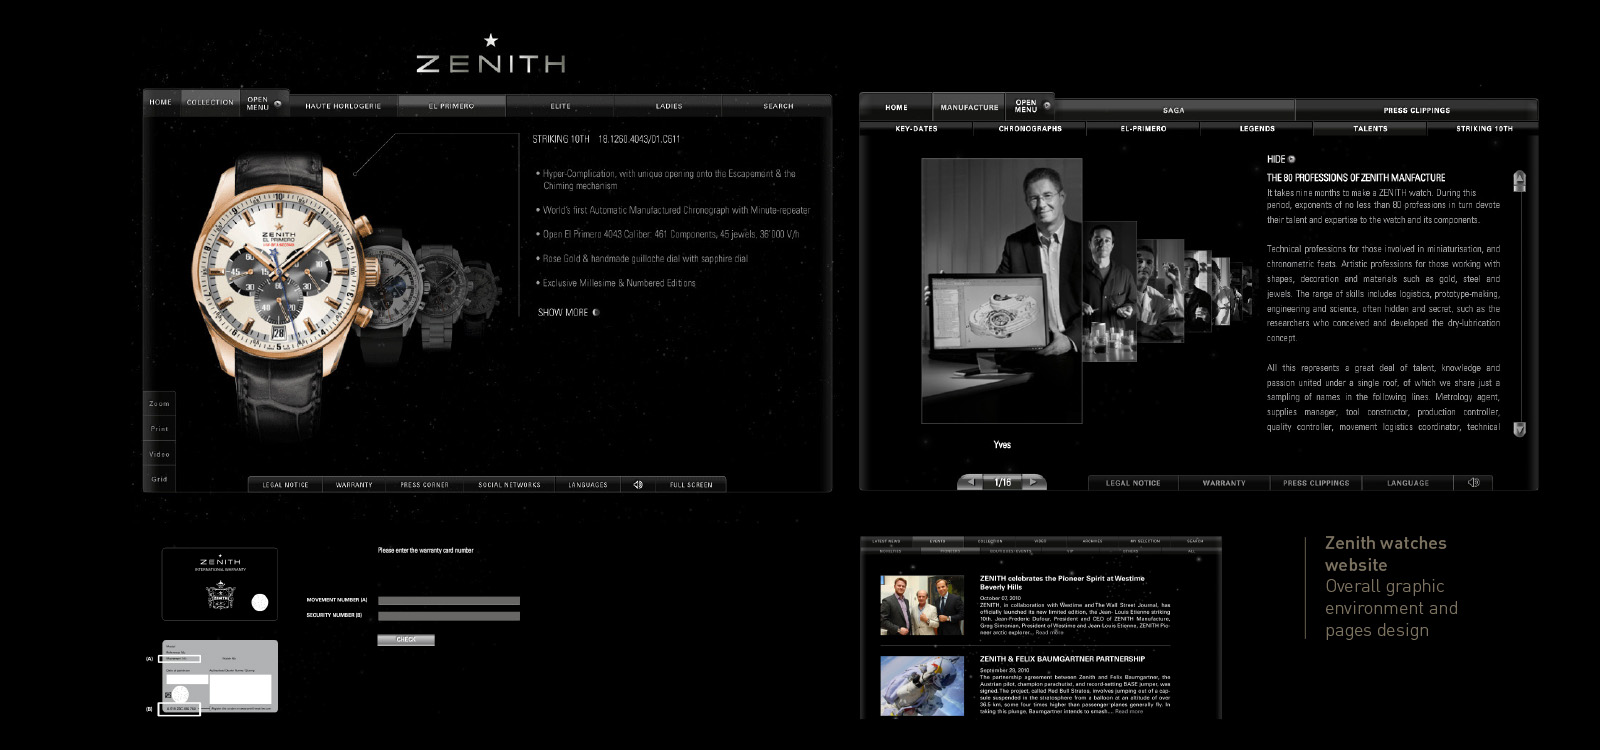 Zenith Watches website by Lionel Portier